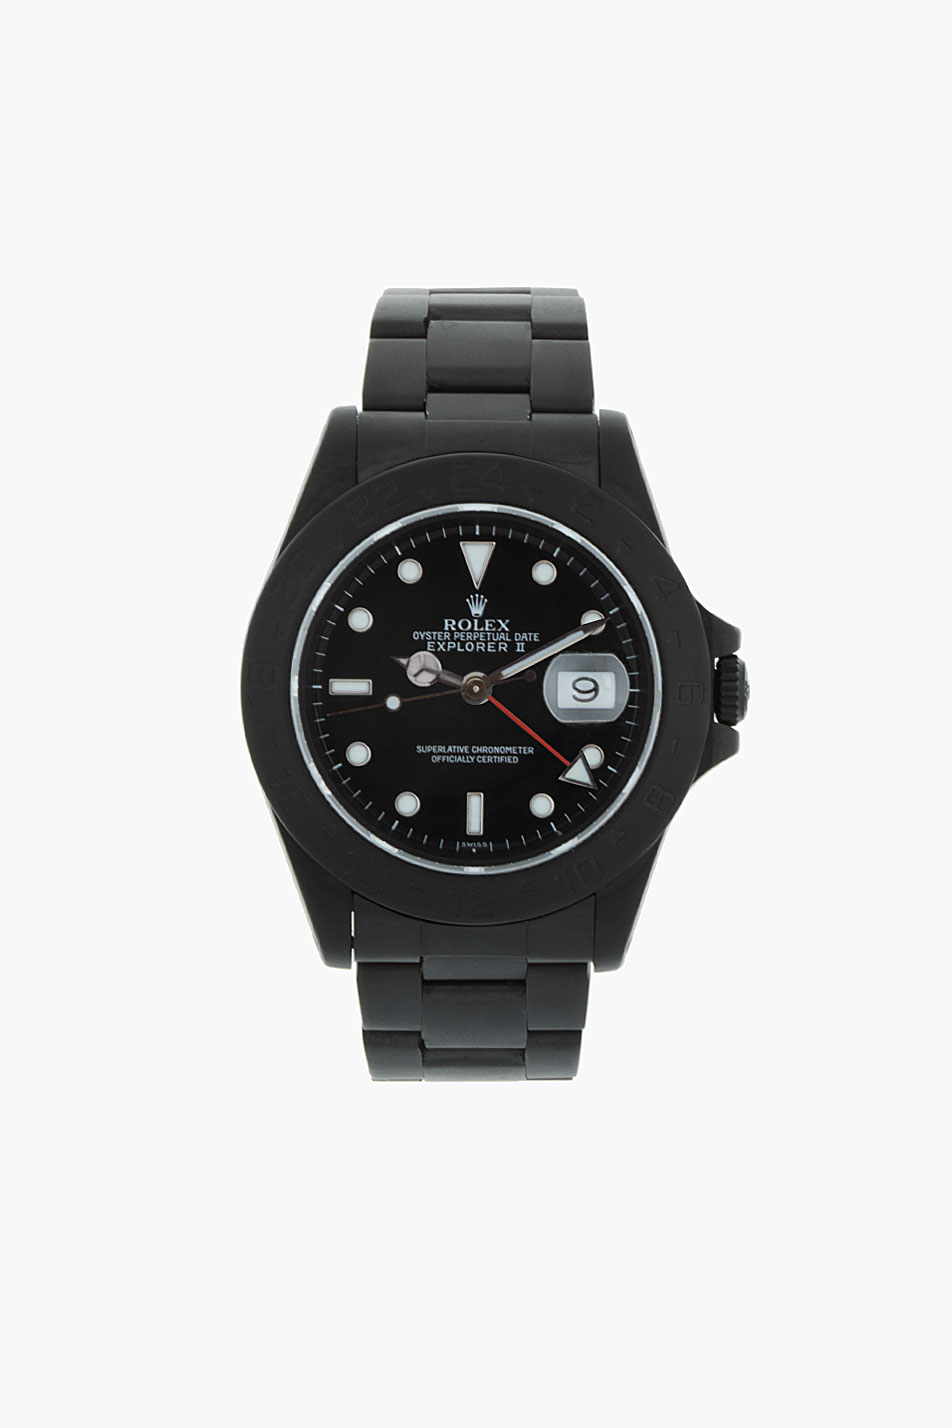 Refurbished Black Rolex Watch Limited Edition 4